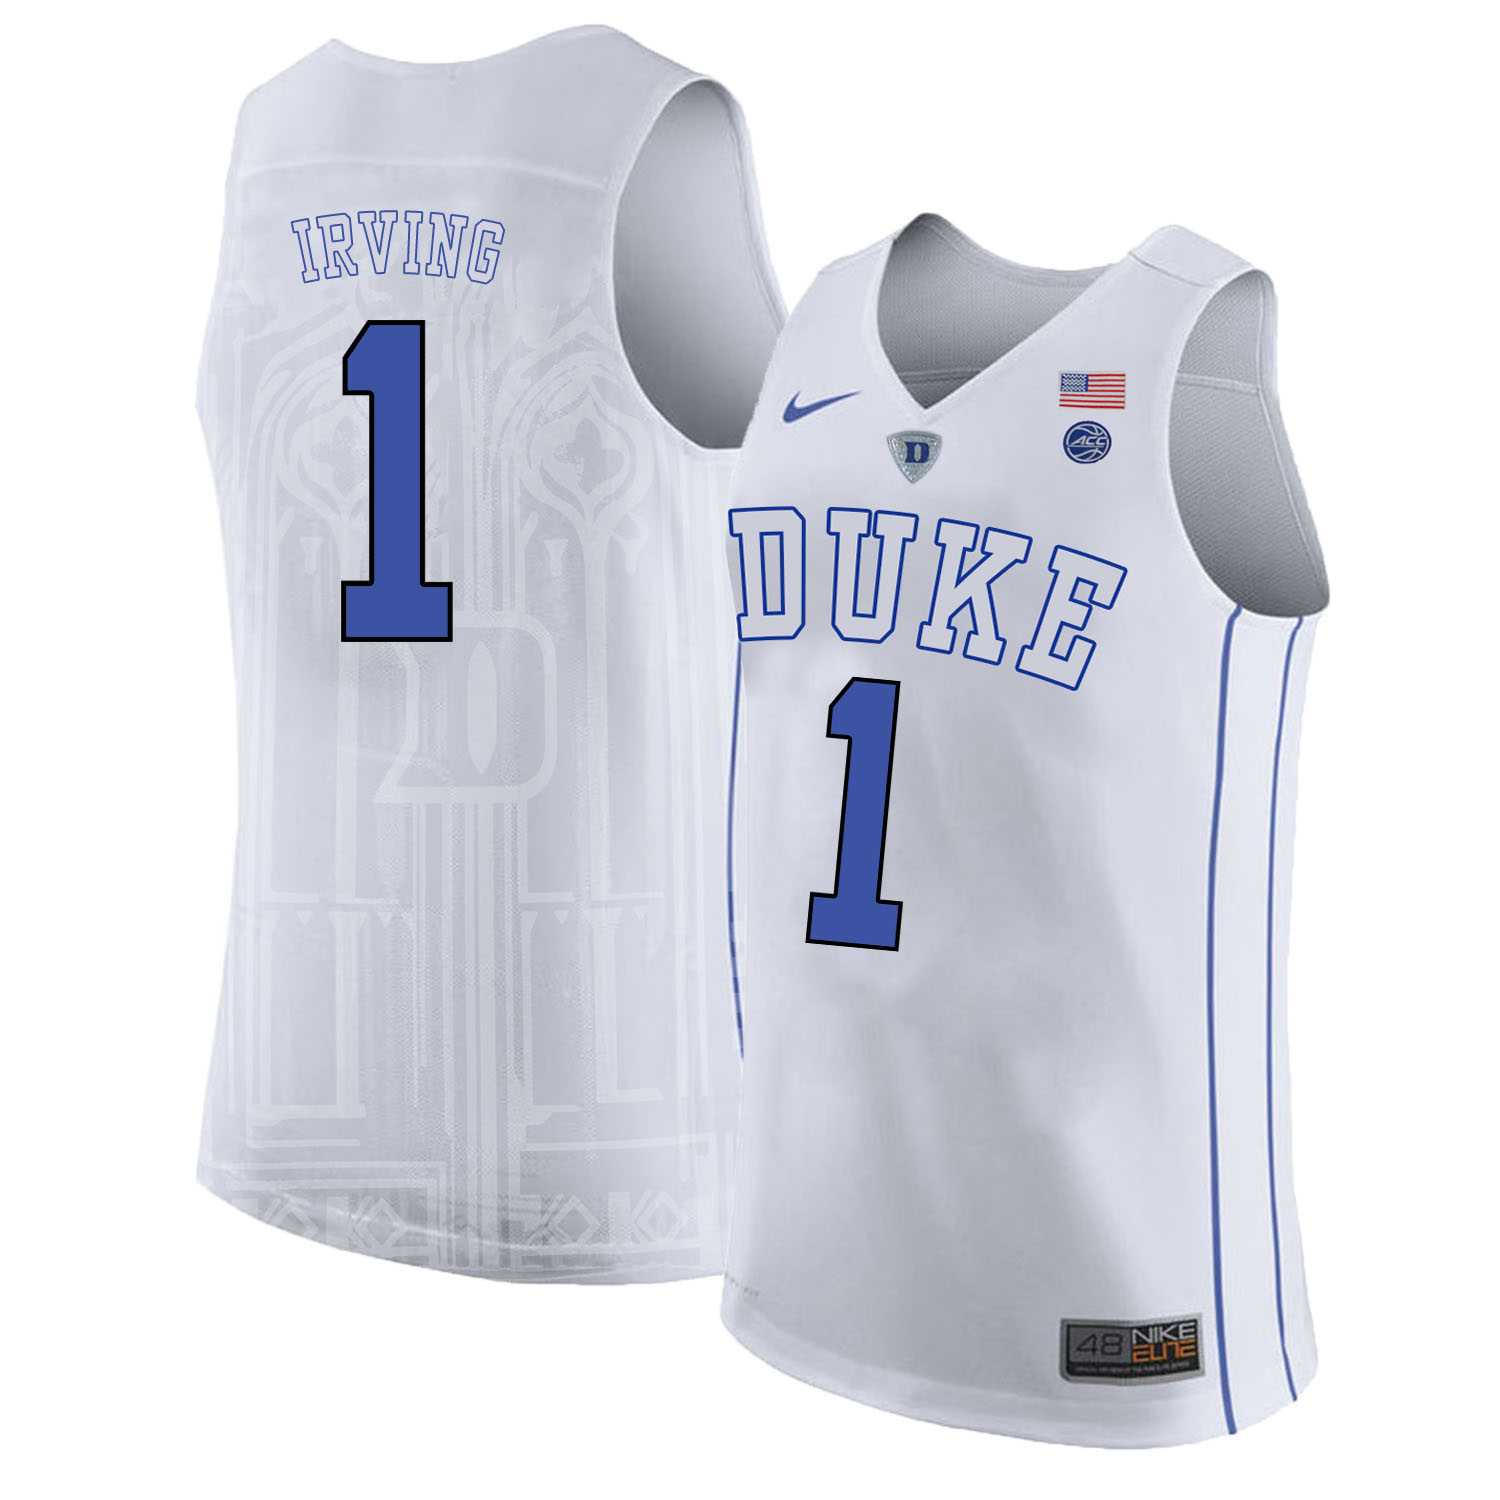 Duke Blue Devils 1 Kyrie Irving White Nike College Basketabll Jersey Dyin